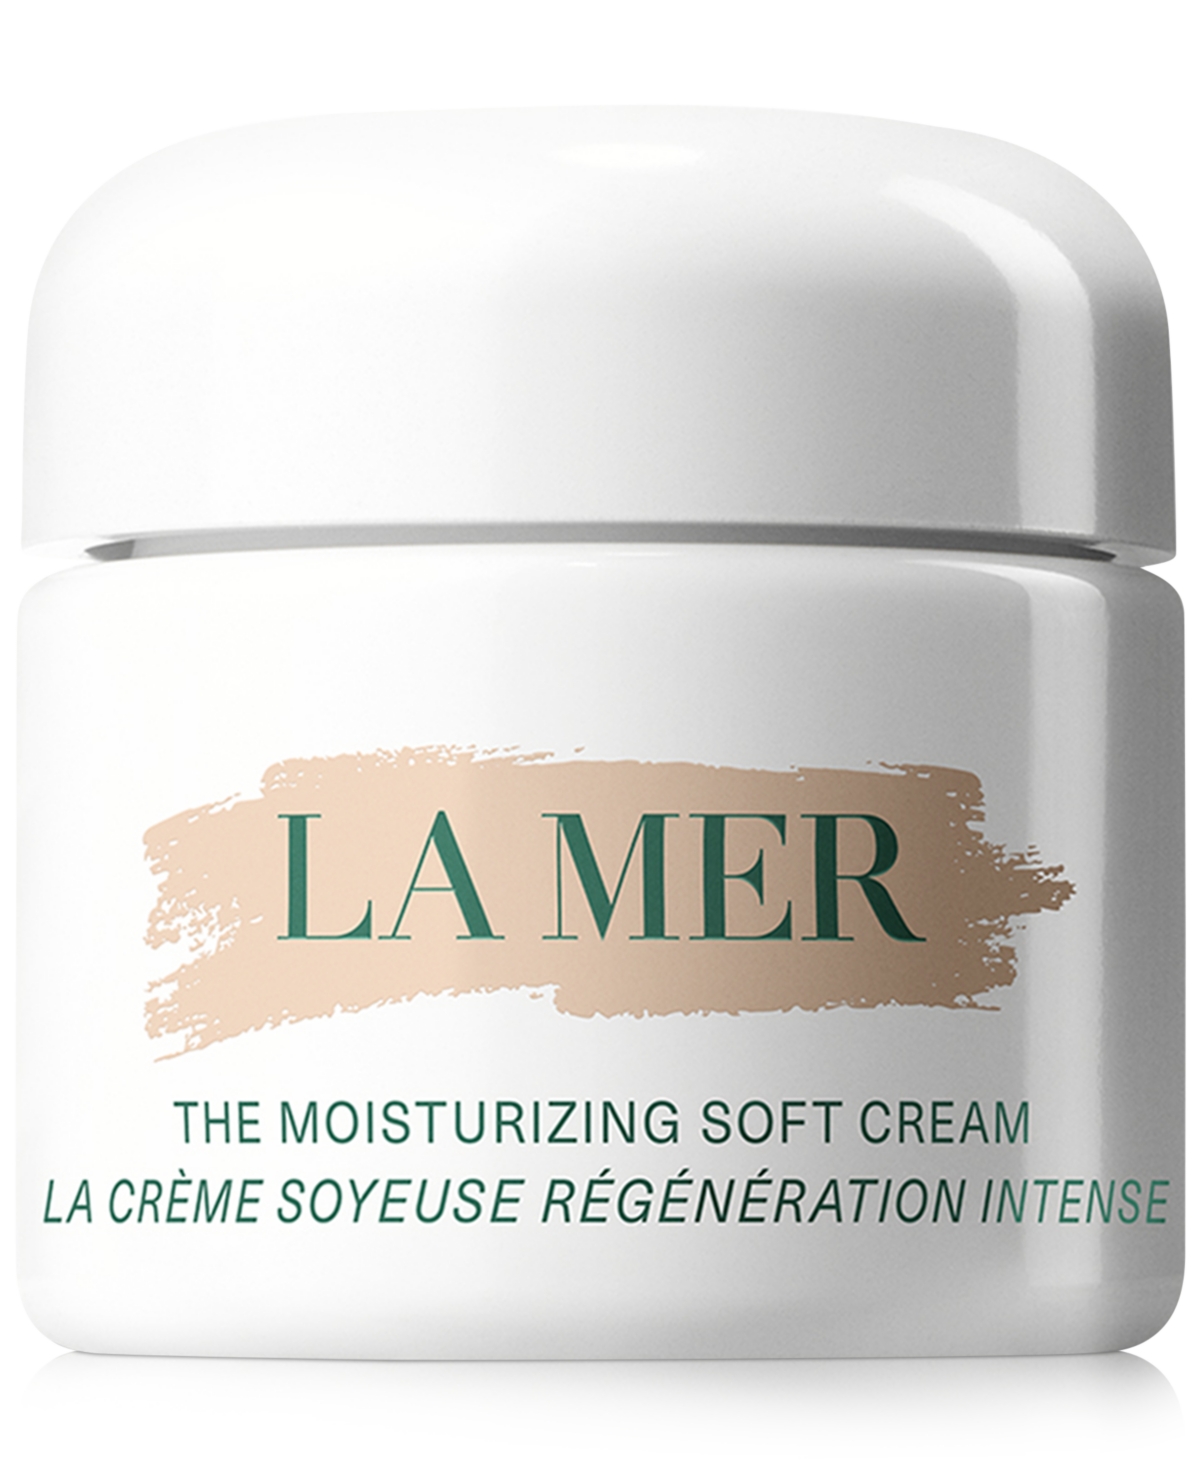 La Mer The Moisturizing Soft Cream, 2 oz.